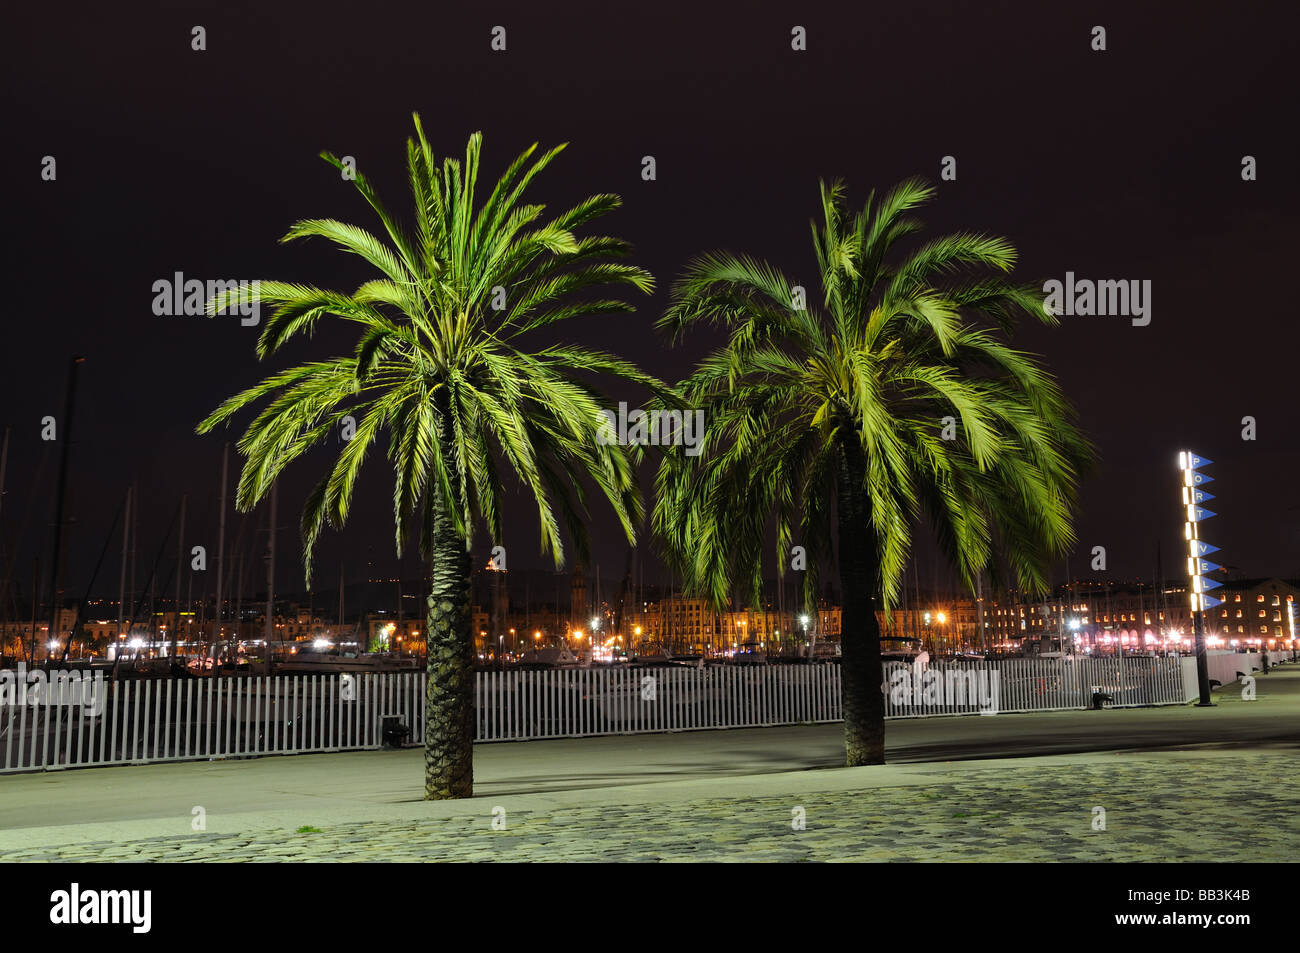 Iluminated Palm Trees in Port Vell, Barcelona Spain Stock Photo